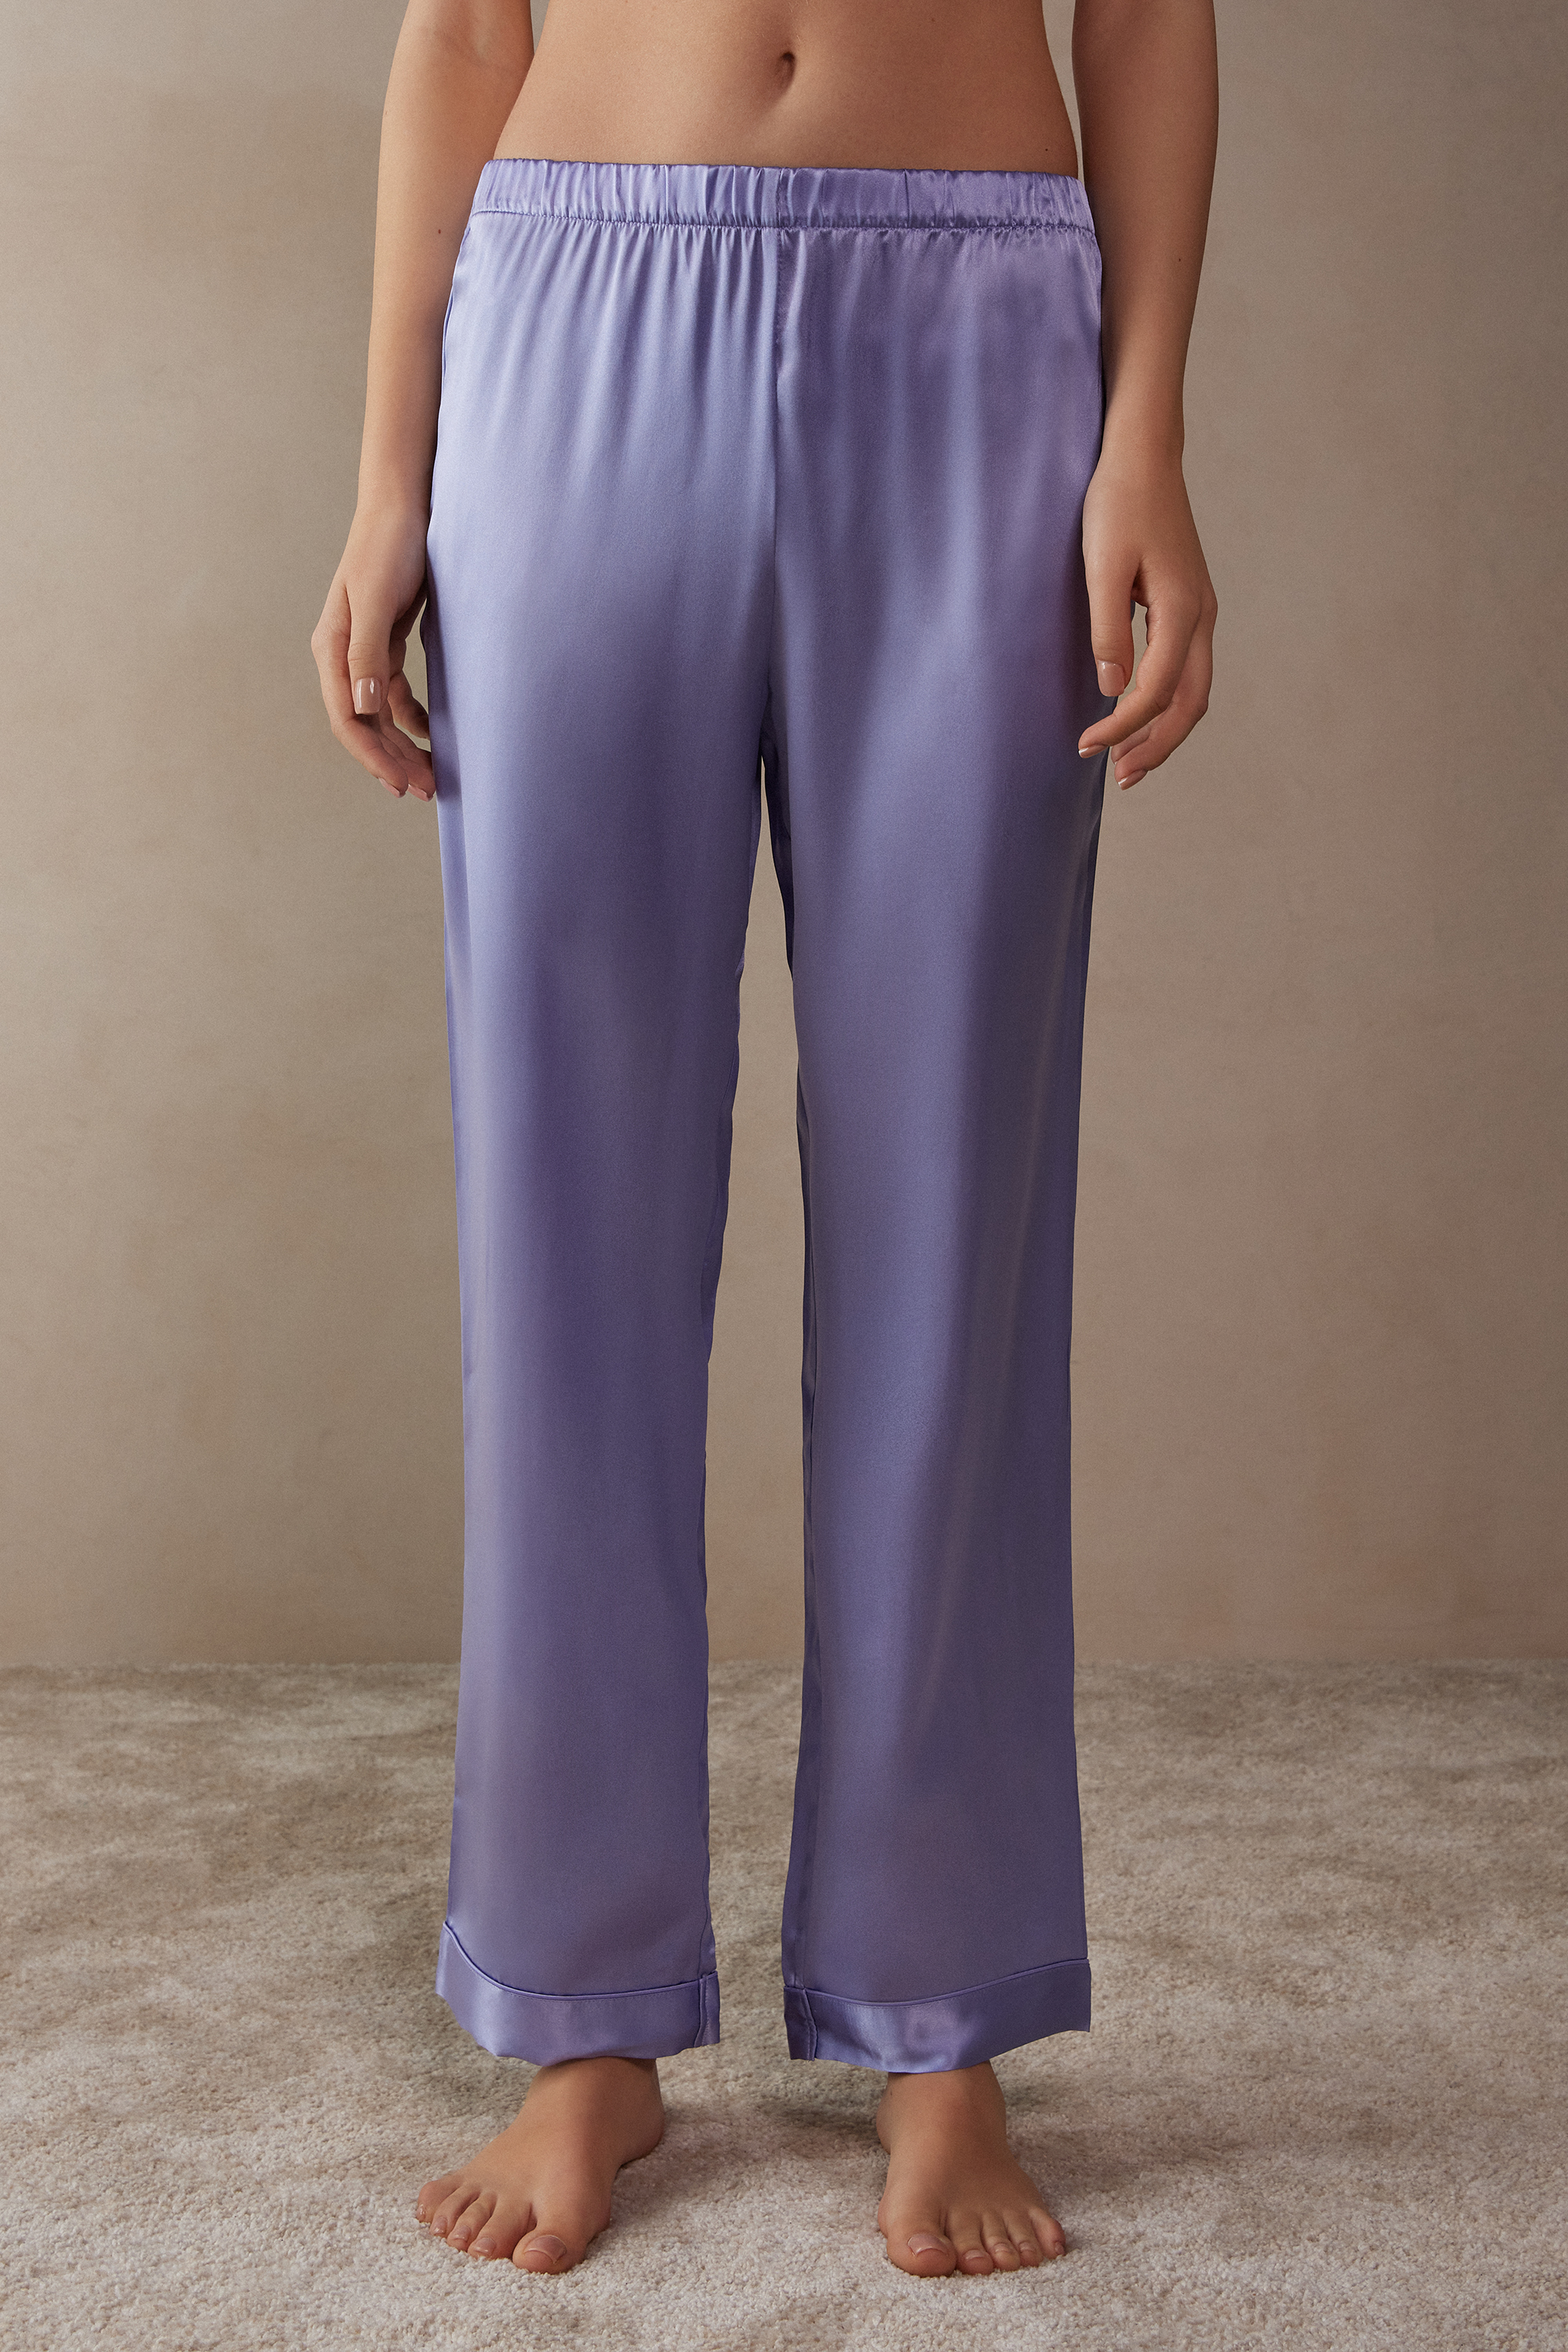 Intimissimi Silk Satin Pajama Pants Woman Violet Size S